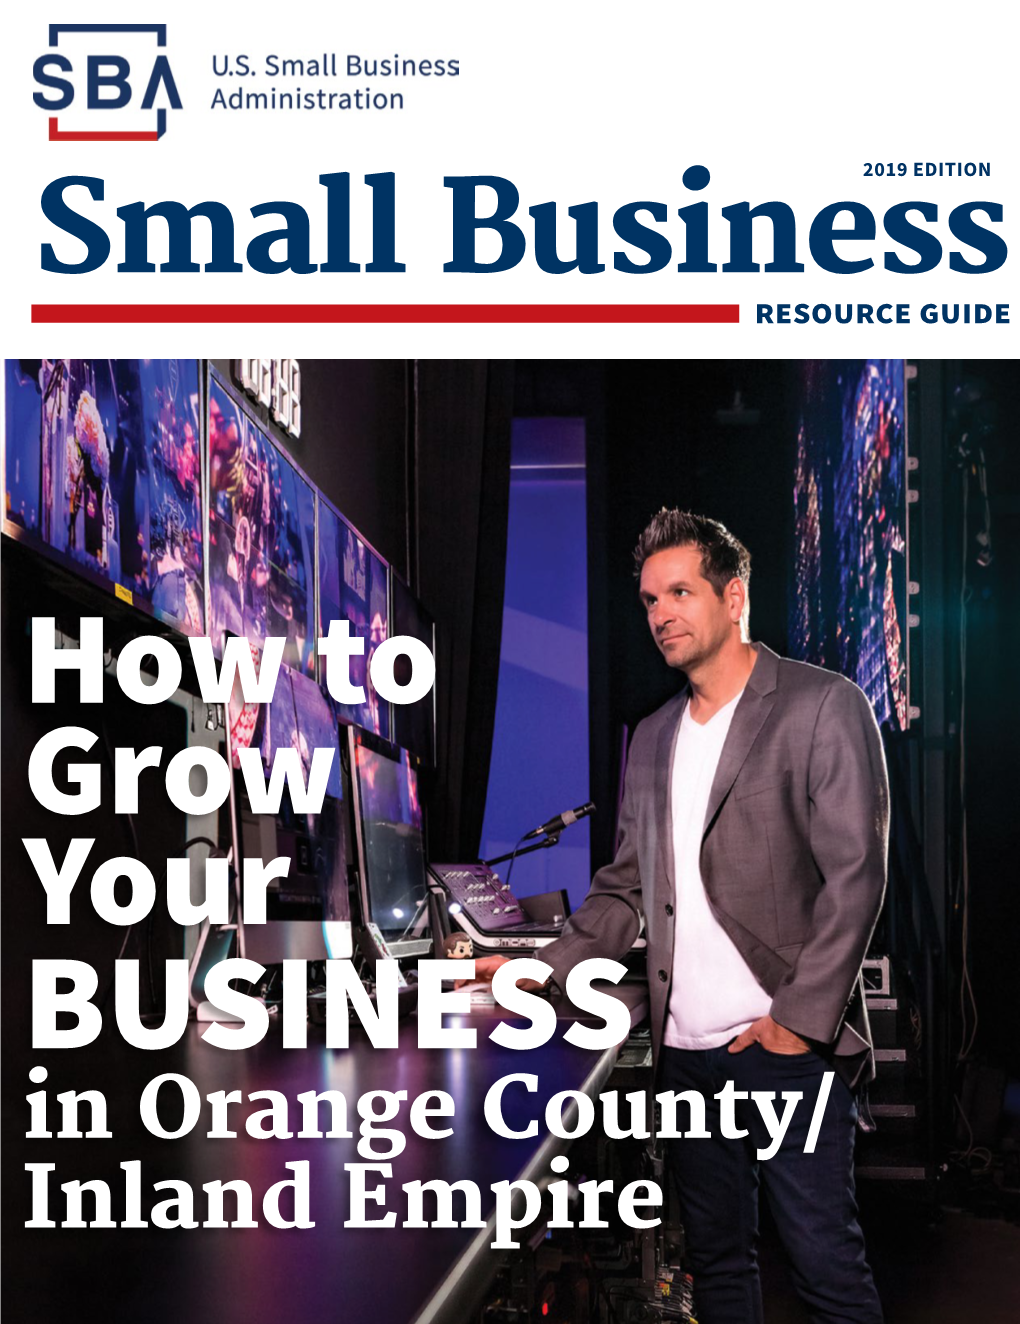 Orange County Inland Empire Small Business Resource Guide